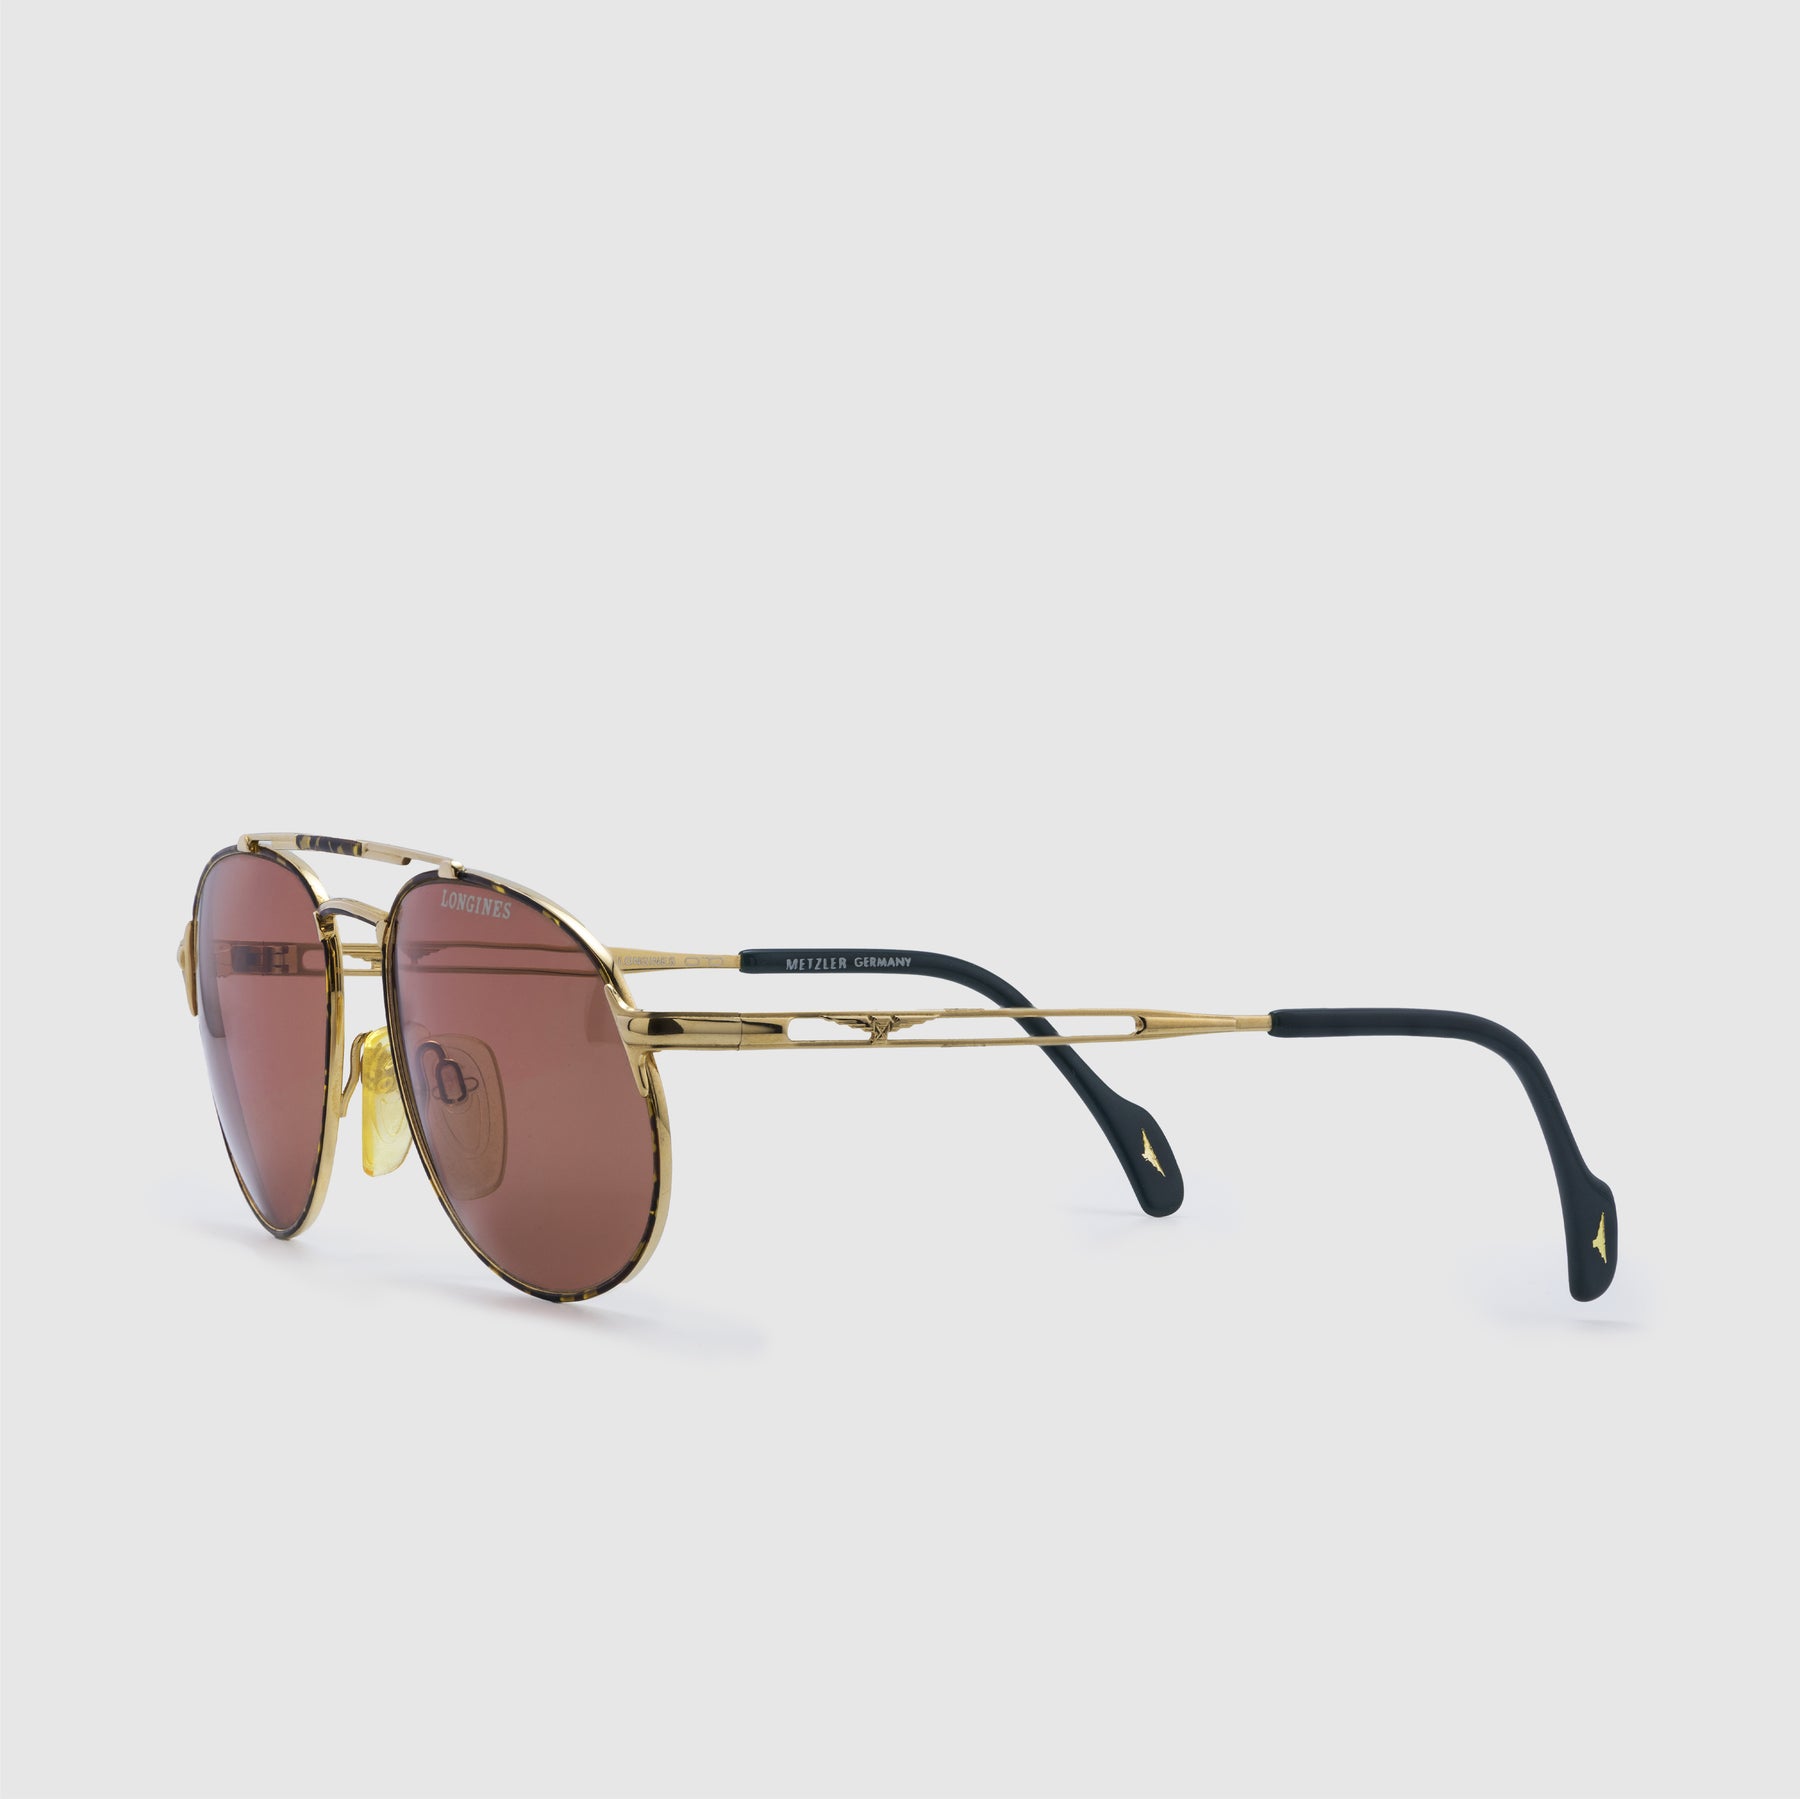 Vintage Longines Sunglasses circa 1980's